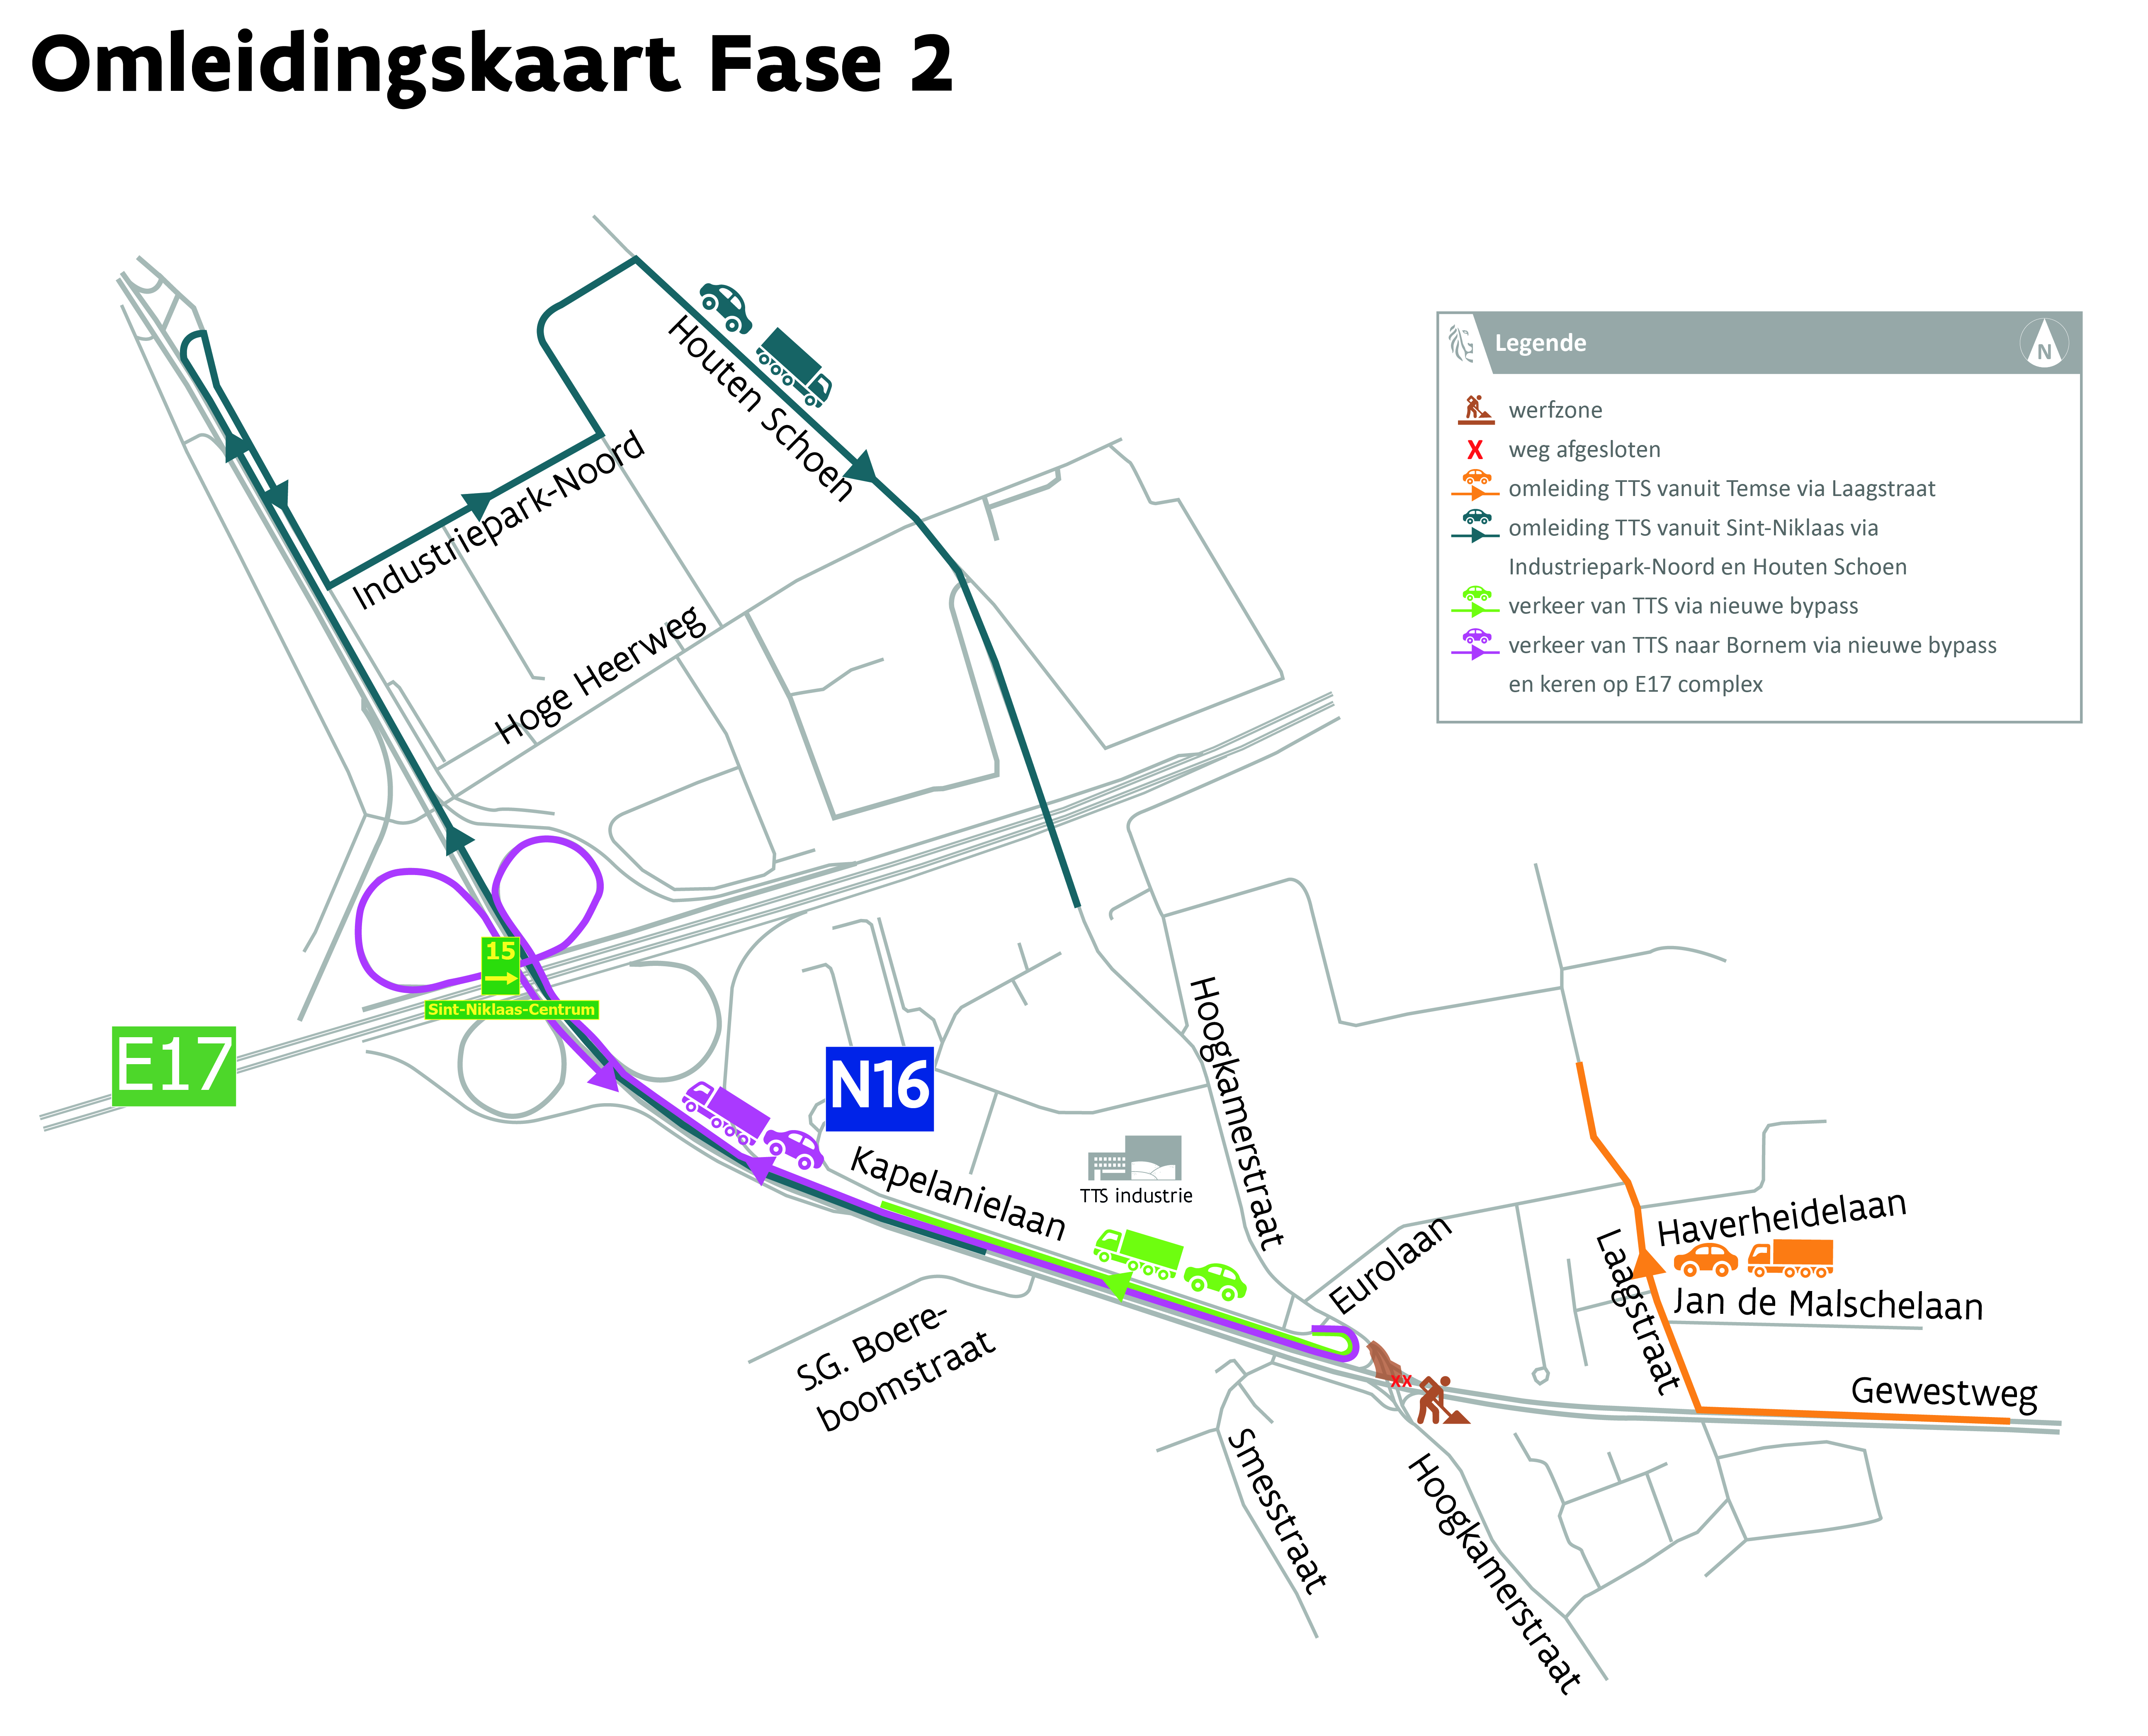 N16 Hoogkamerstraat - omleiding wegen- en rioleringswerken fase 2